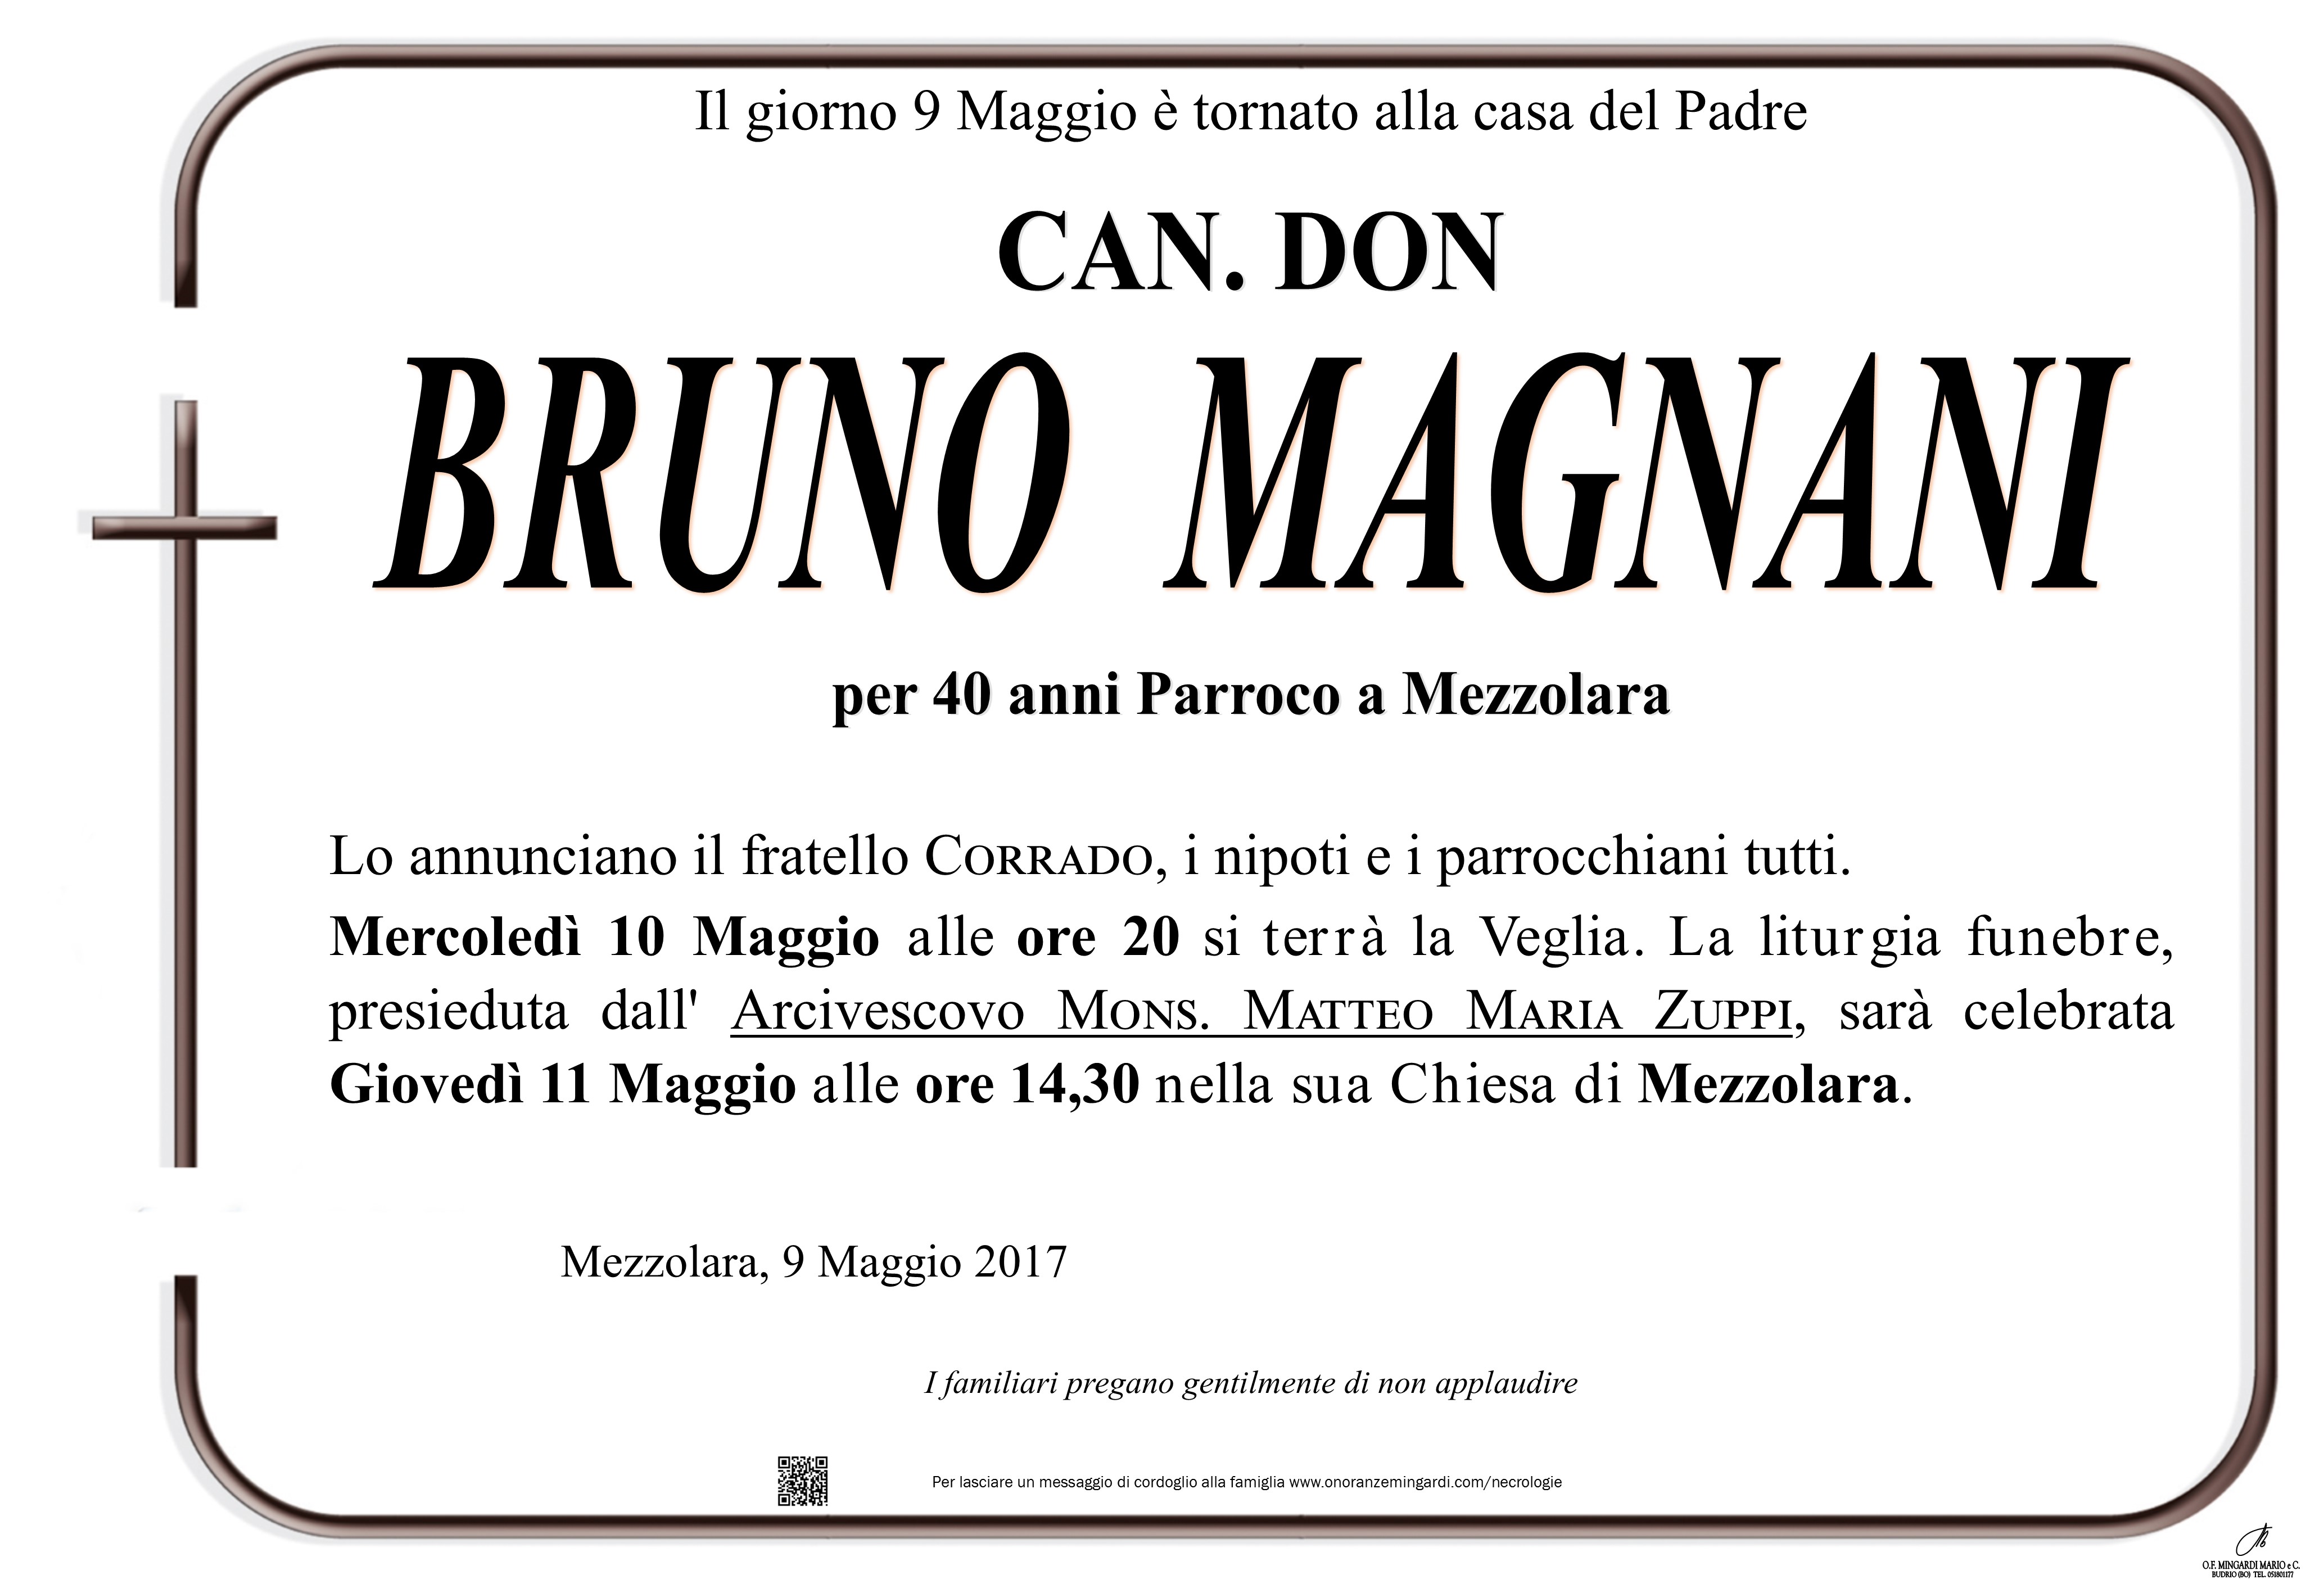 MANIFESTO BRUNO MAGNANI